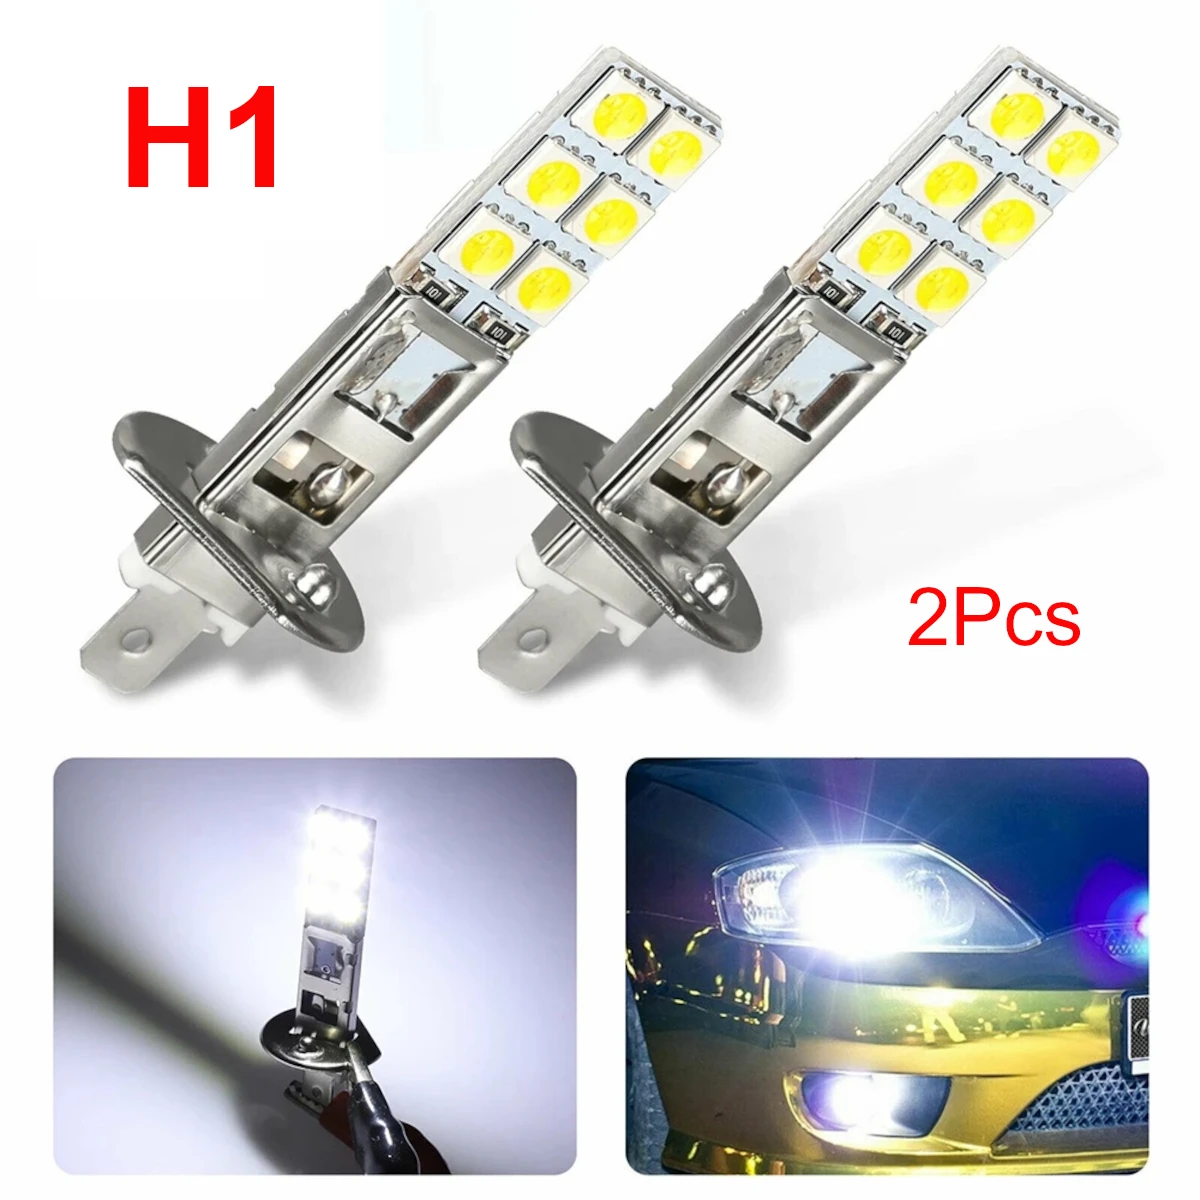 

2Pcs H1 LED Car Fog Driving Light Headlight Bulbs 5050 12SMD 24W 5000K Super White for Auto Motorcycle Bike